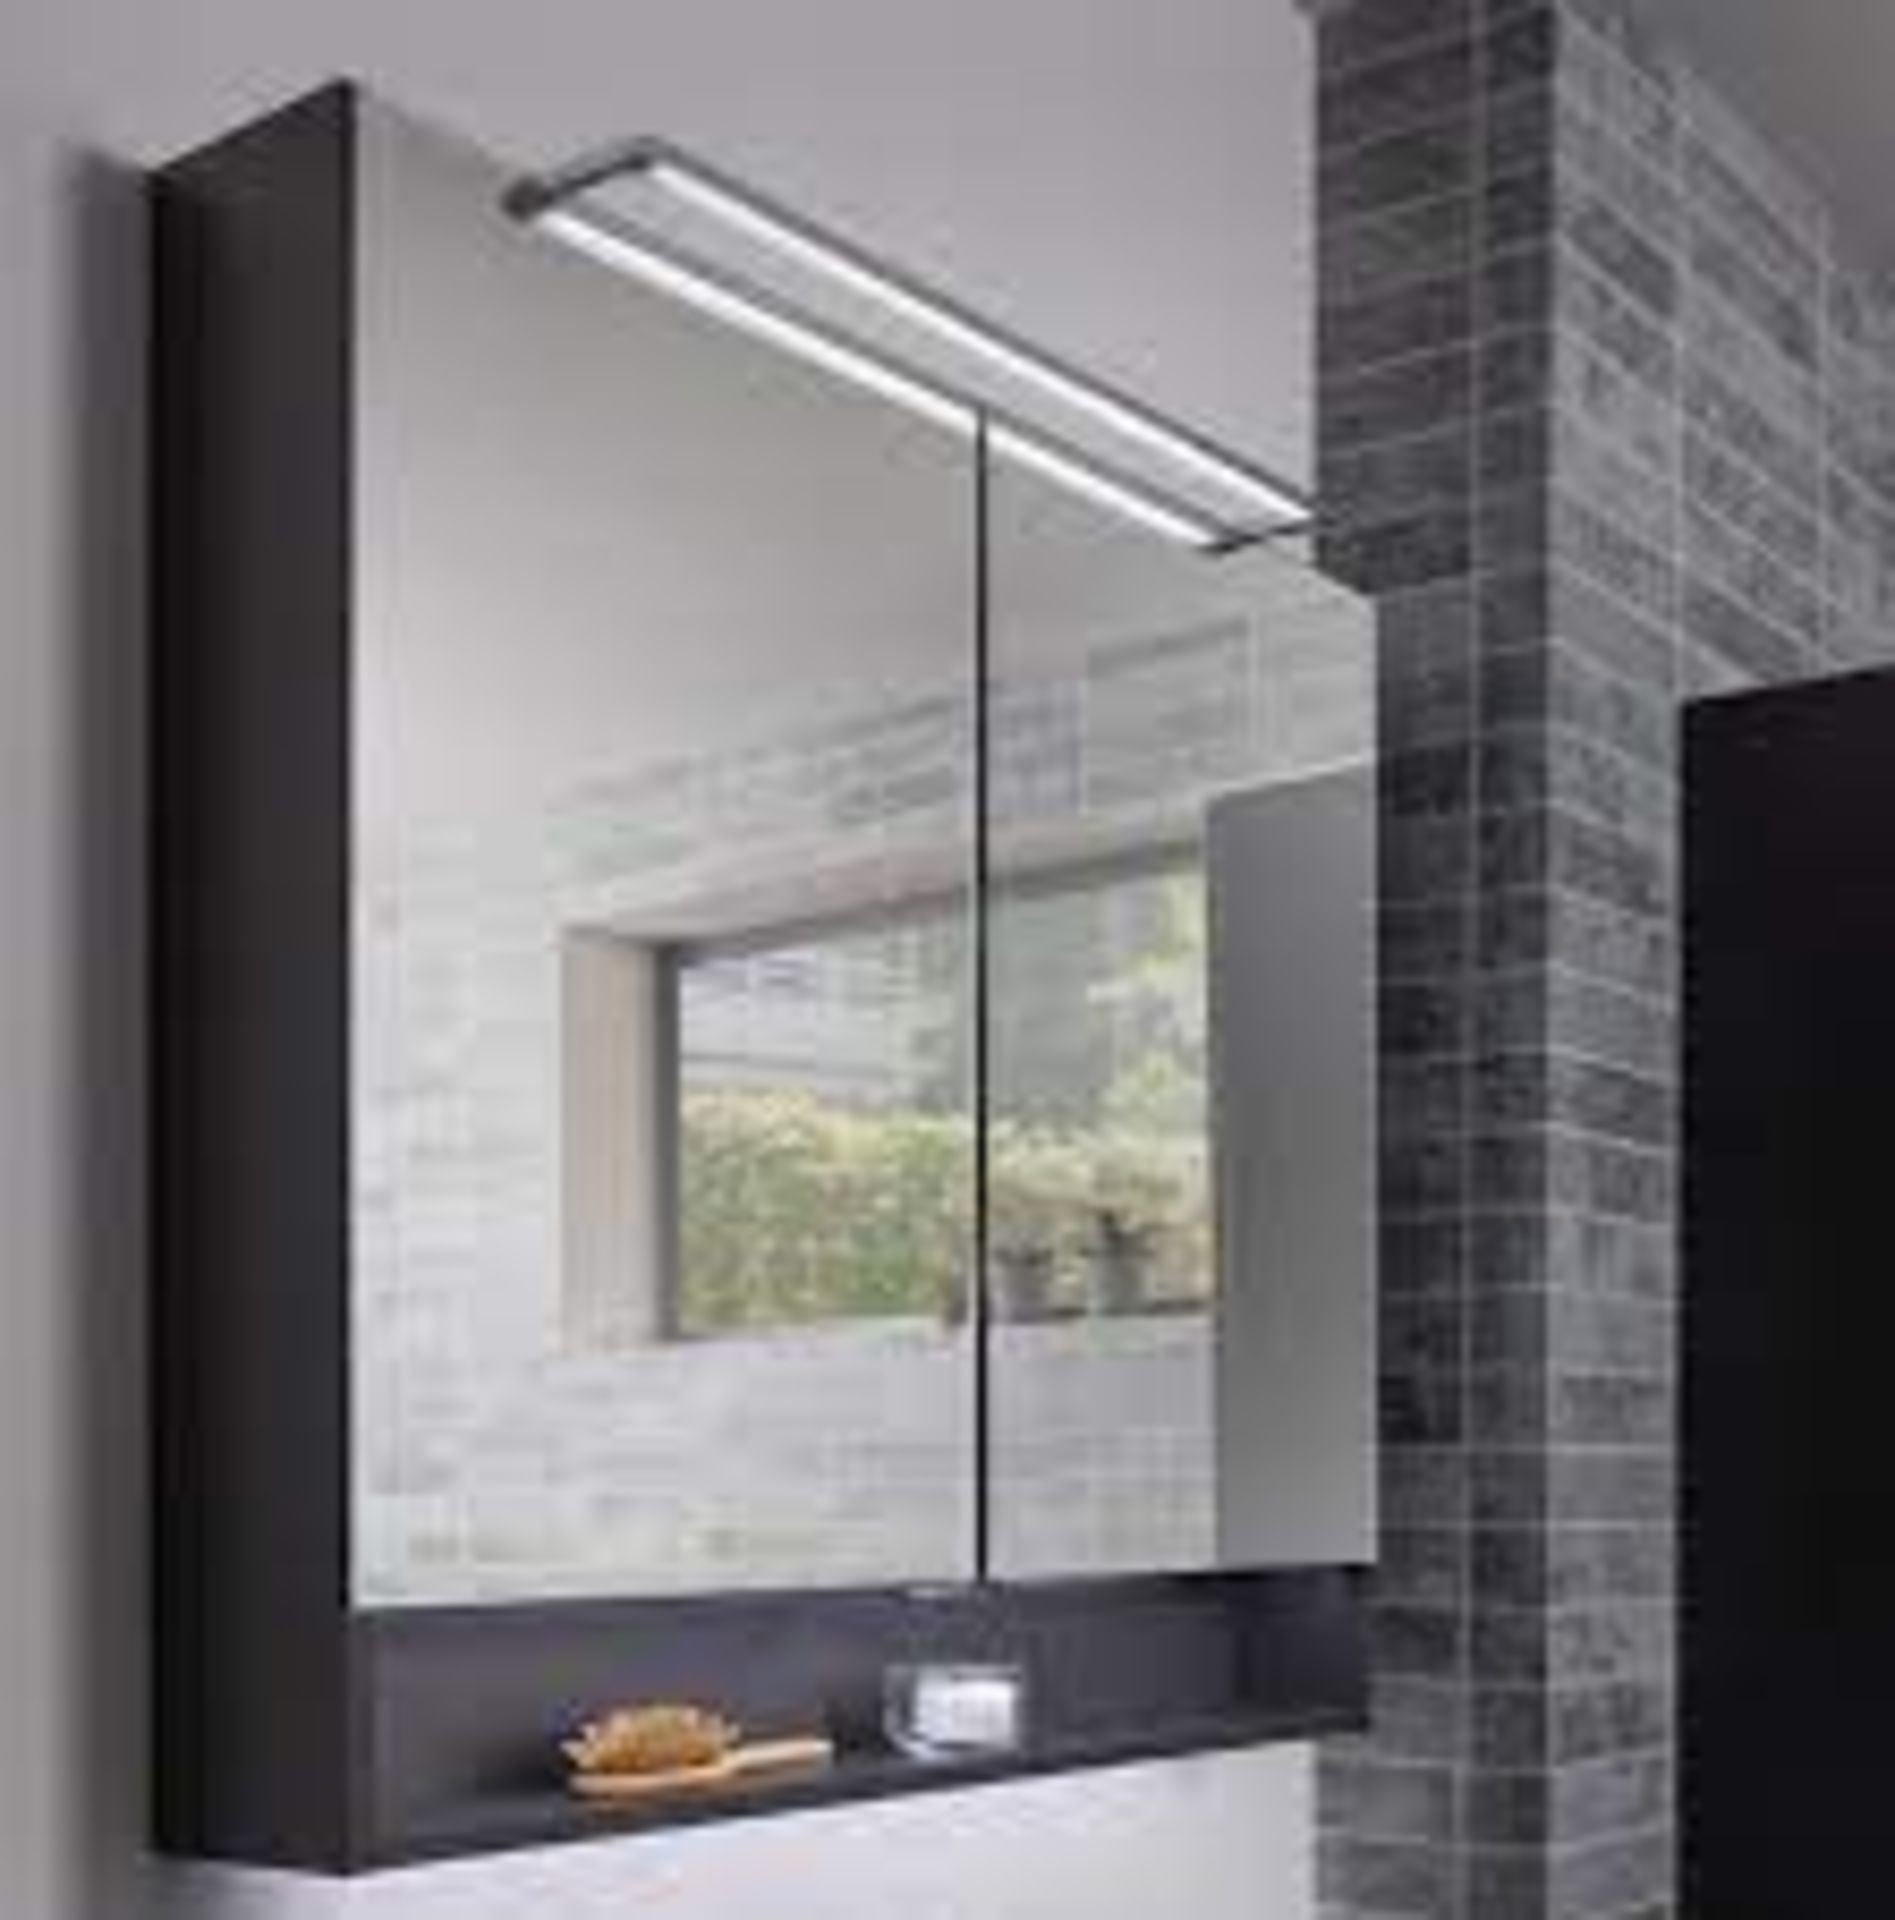 Metro Lane Simonetti 100cm x 61.8cm Surface Mount Mirror Cabinet with LED Lighting RRP £304.99 (